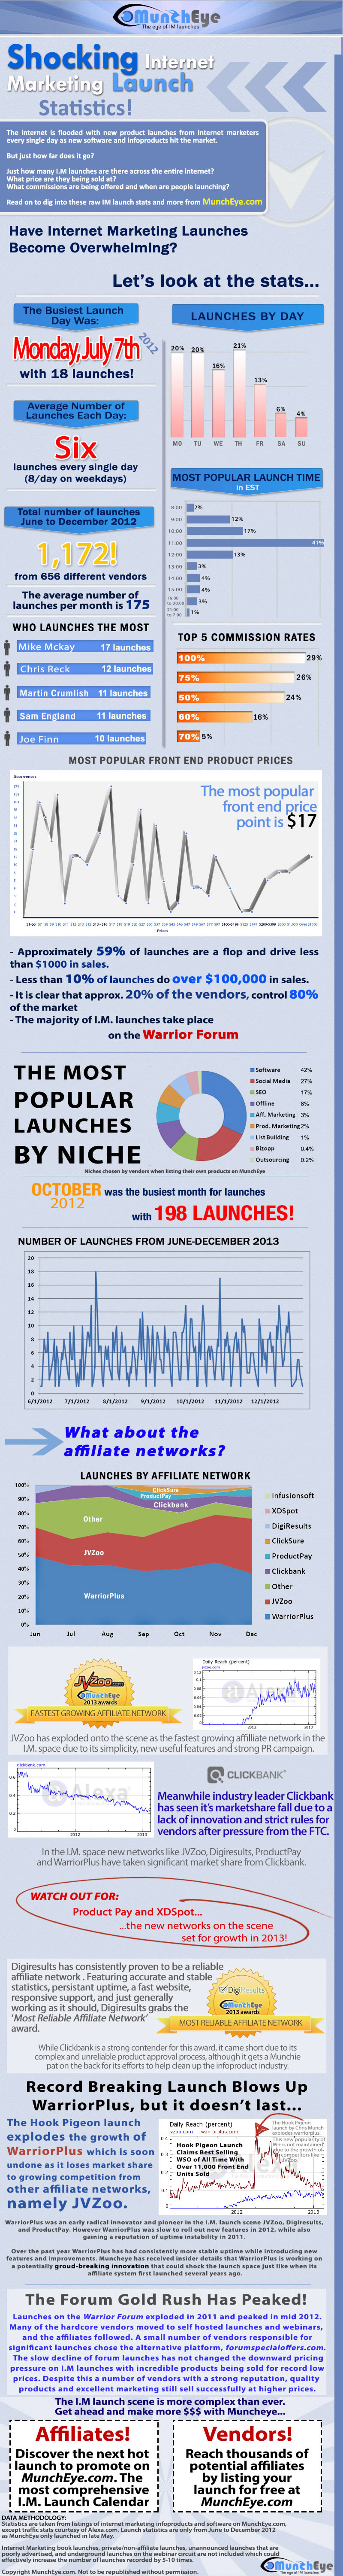 2012 Internet Marketing Launch Statistics